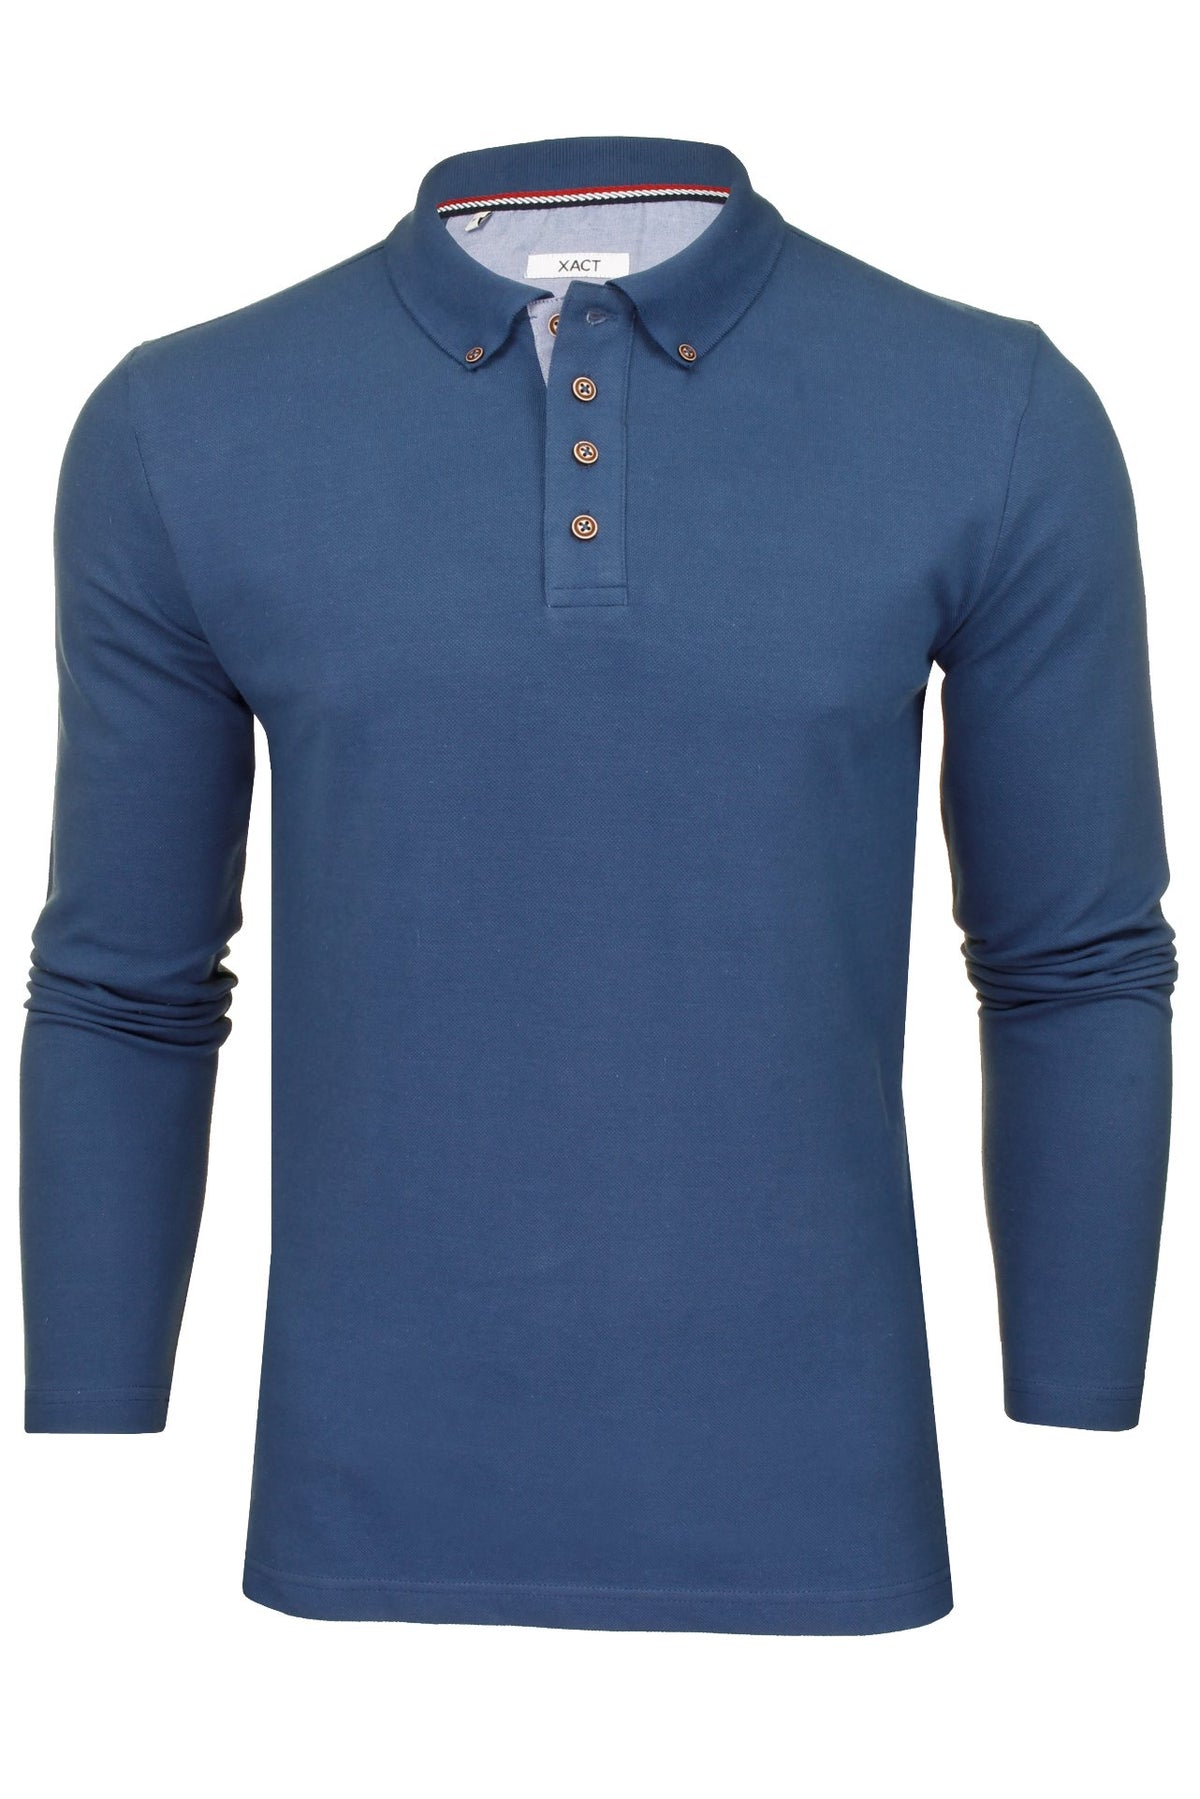 Xact Mens Polo T-Shirt Pique Long Sleeved, 01, XP1003, Vintage Blue